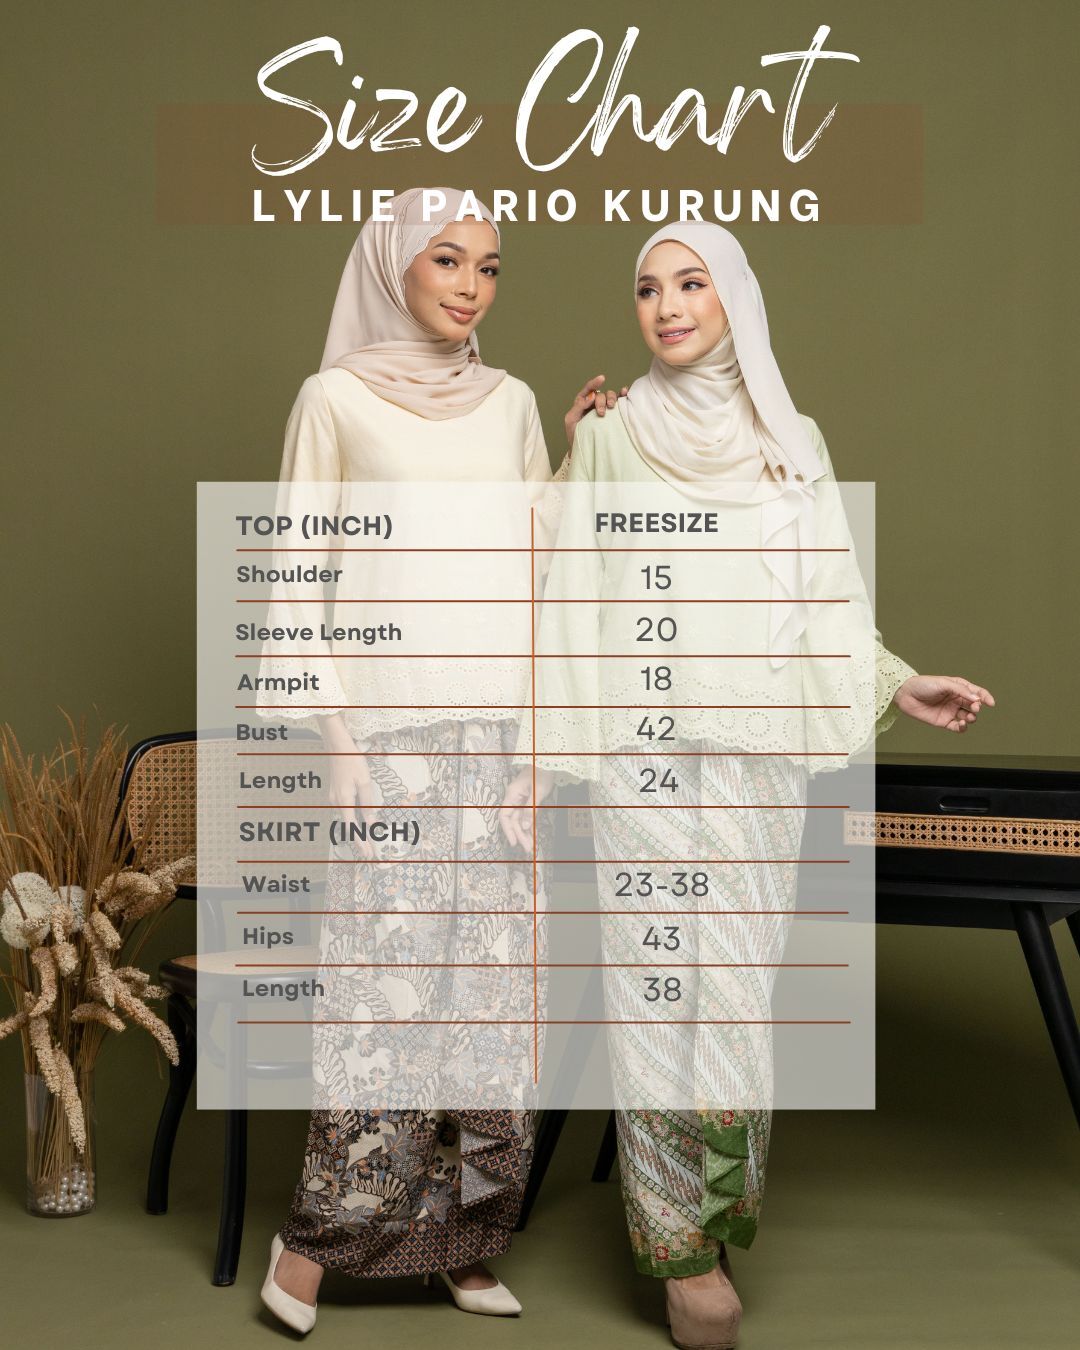 haura-wear-lylie-kurung-kebaya-sulam-embroidery-pario-klasik-tradisional-mini kebaya-fabrik eyelet-raya-muslimah-long-sleeve-baju-skirt-kain-perempuan-baju-sepasang (18)